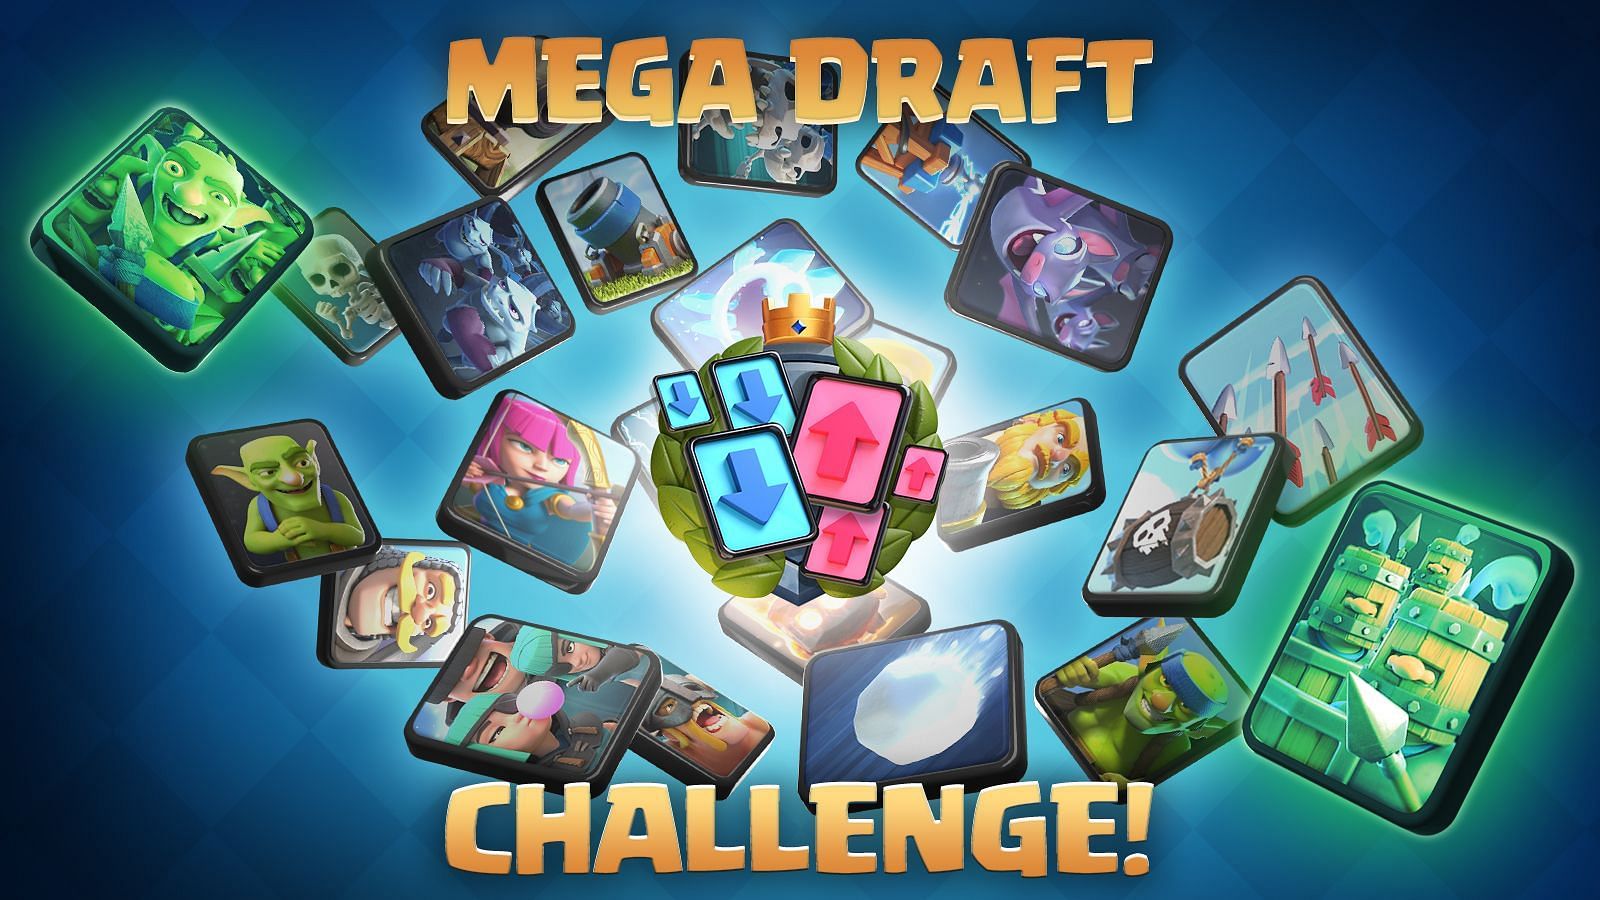 Challenge (Image via Supercell)